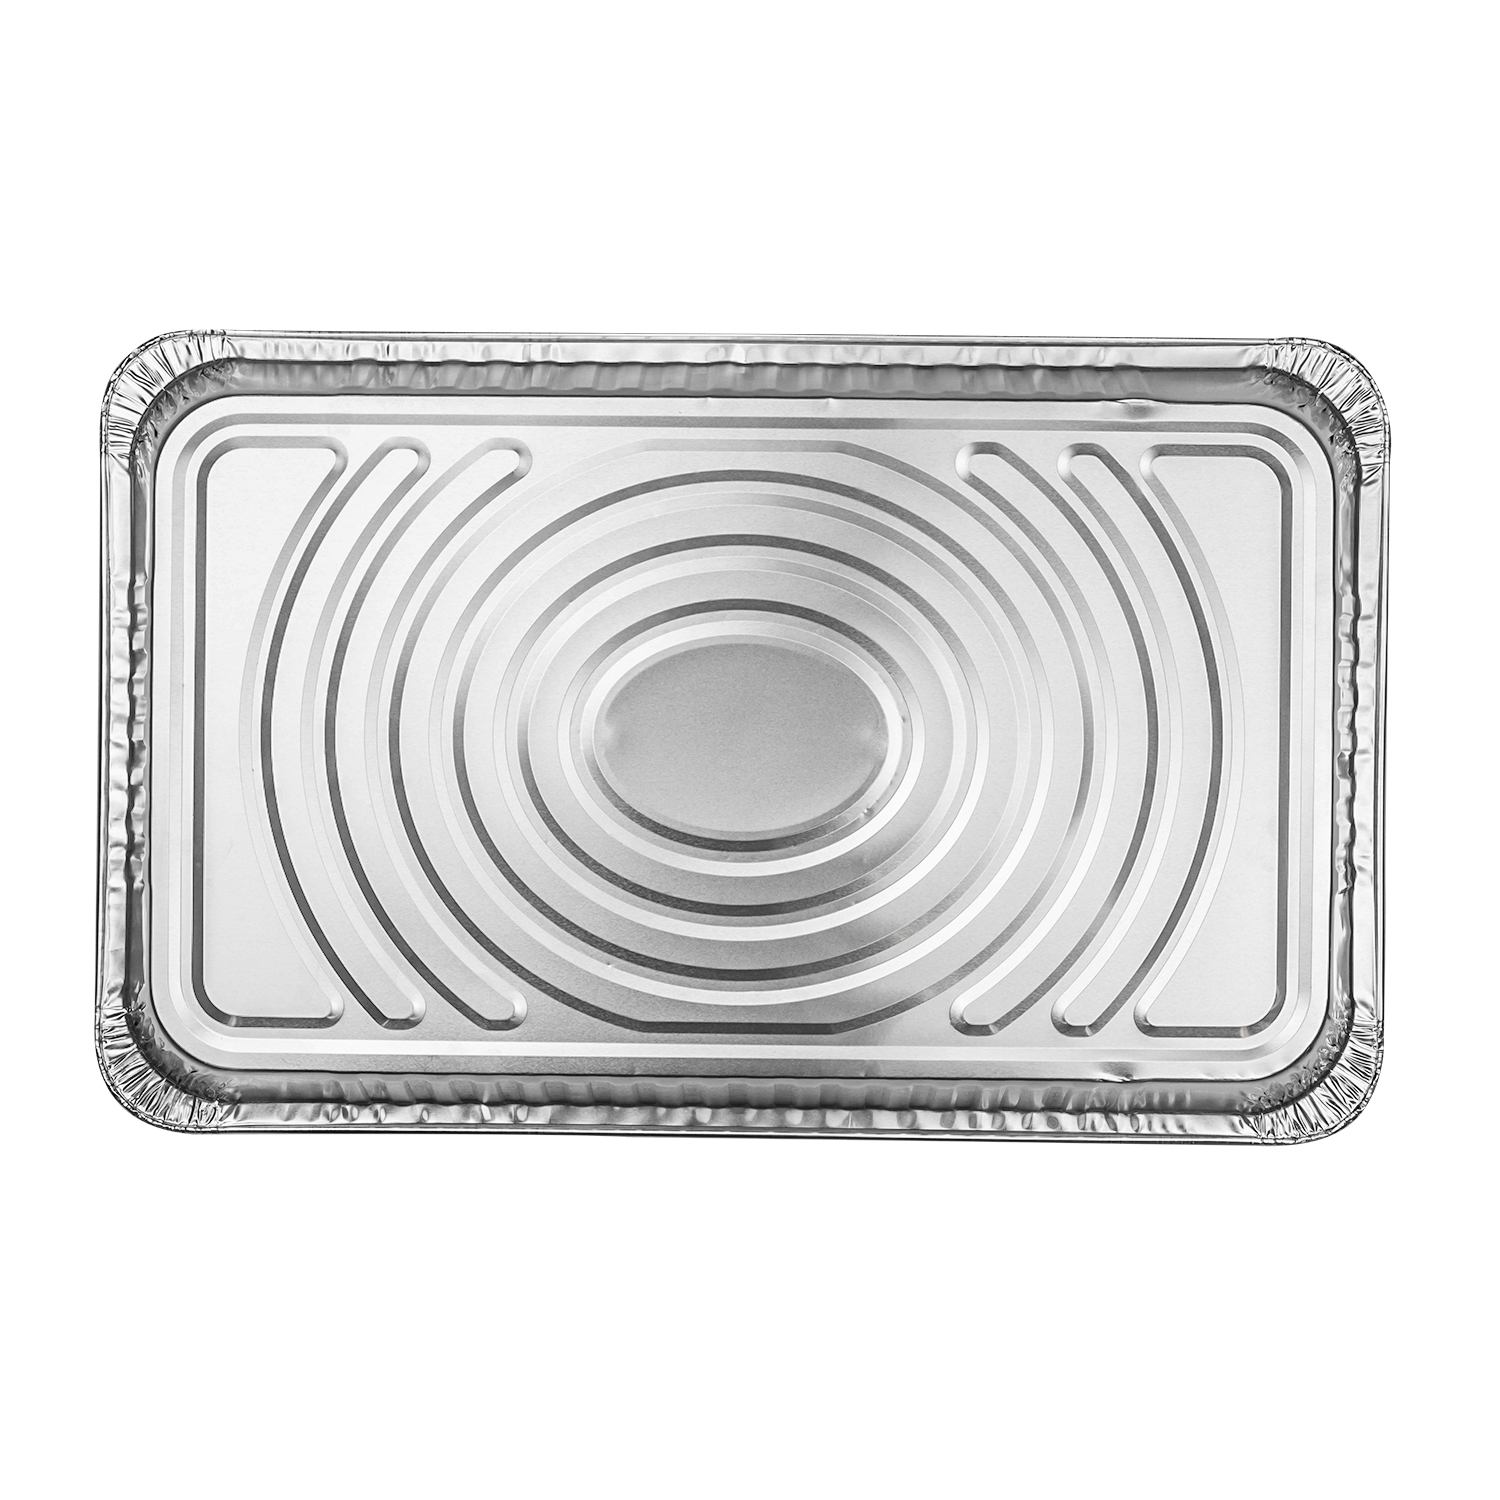 Karat Full Size Standard Aluminum Foil Steam Table Pan, Medium Depth - 50 pcs